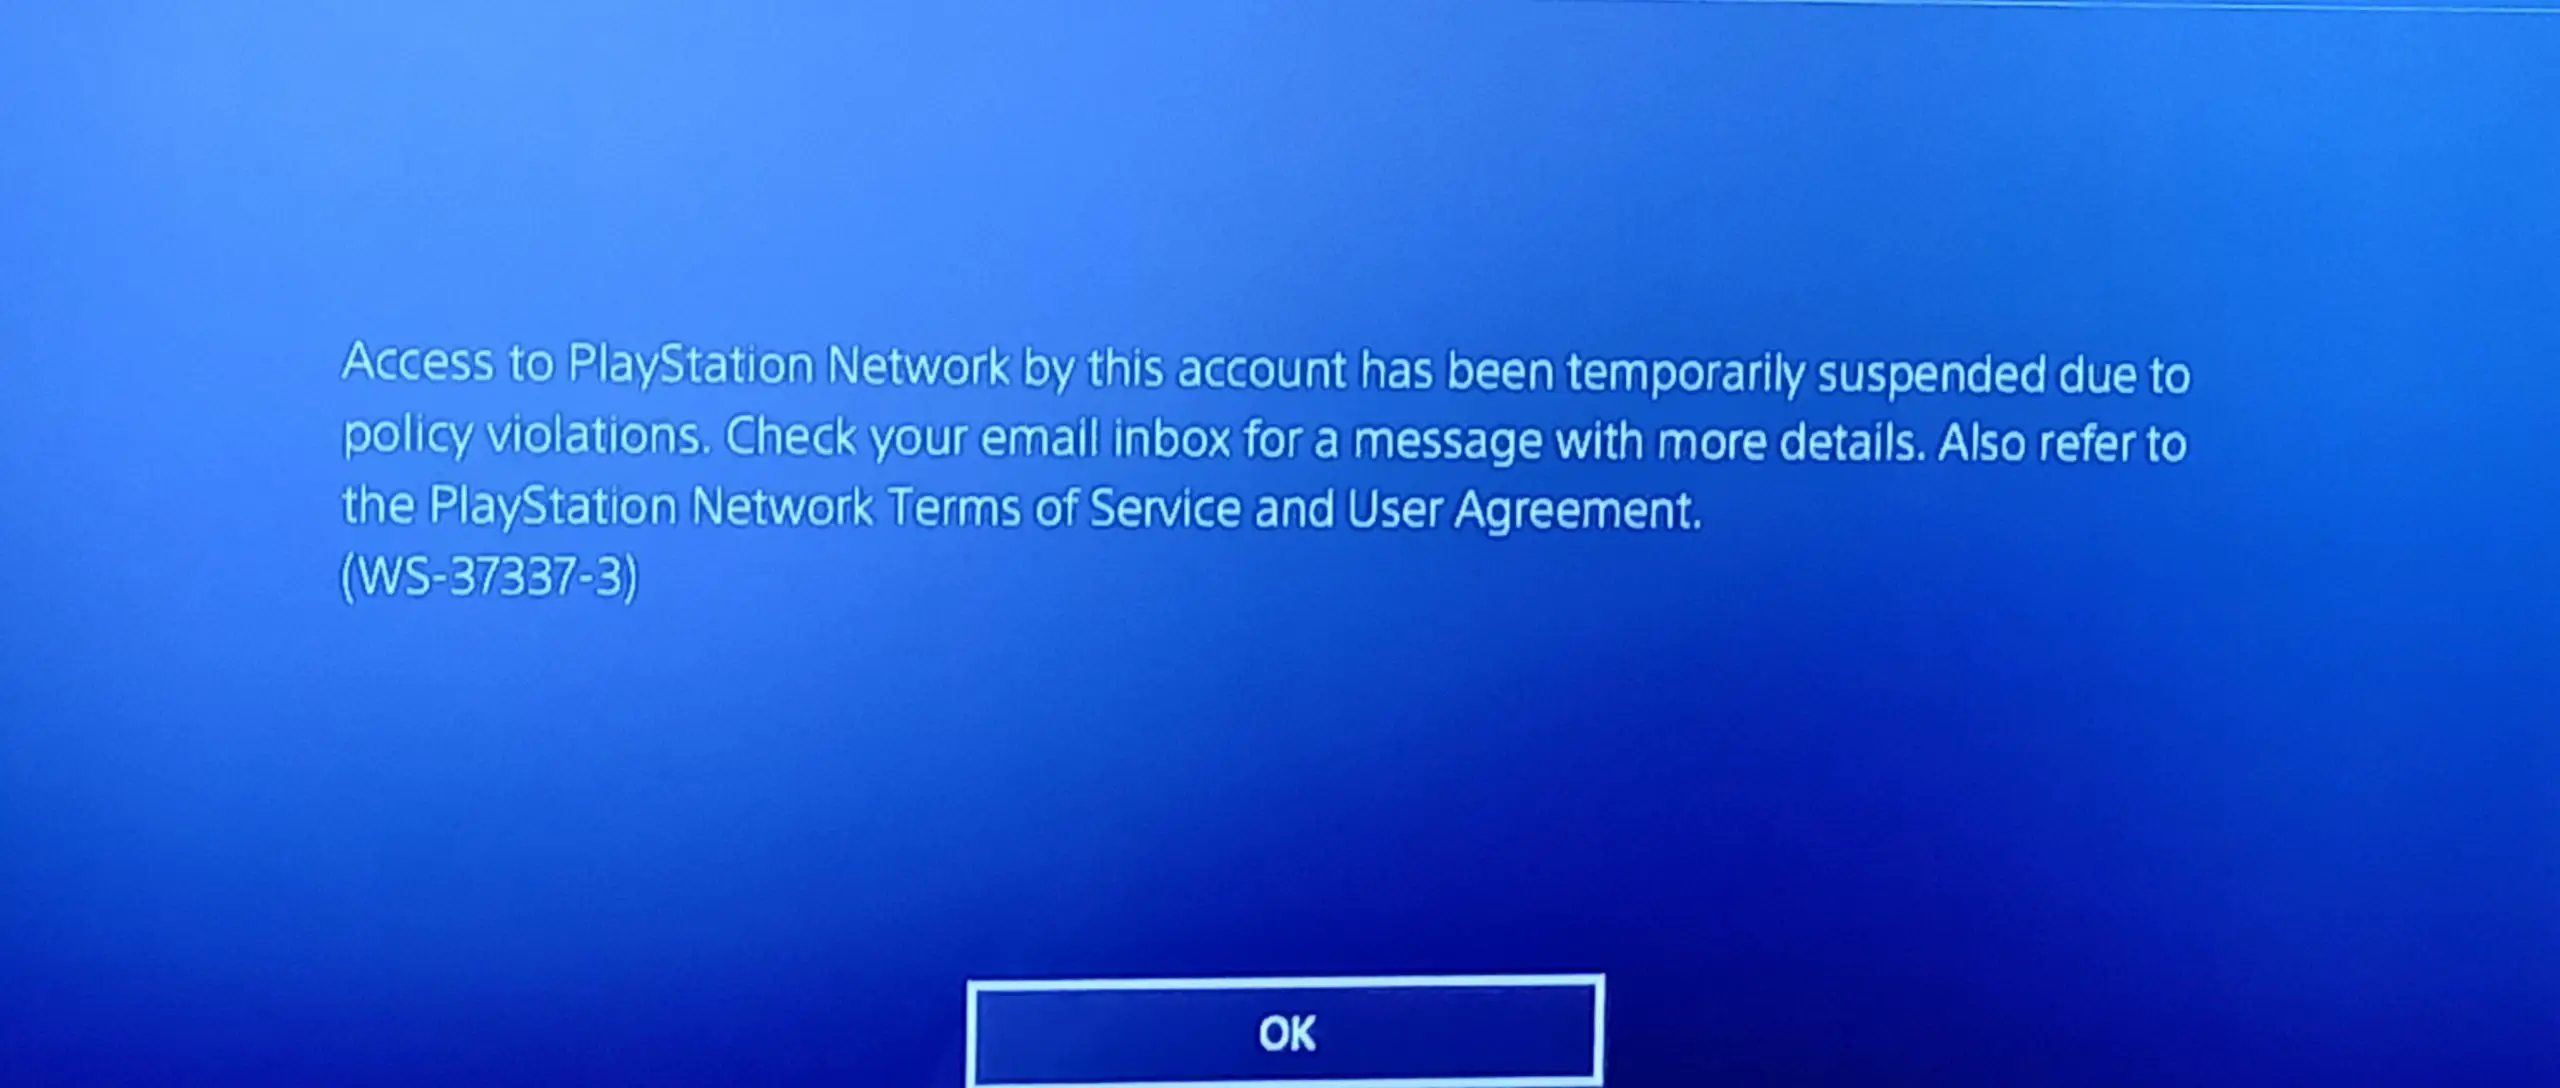 WS-37337-3 Error on PS4